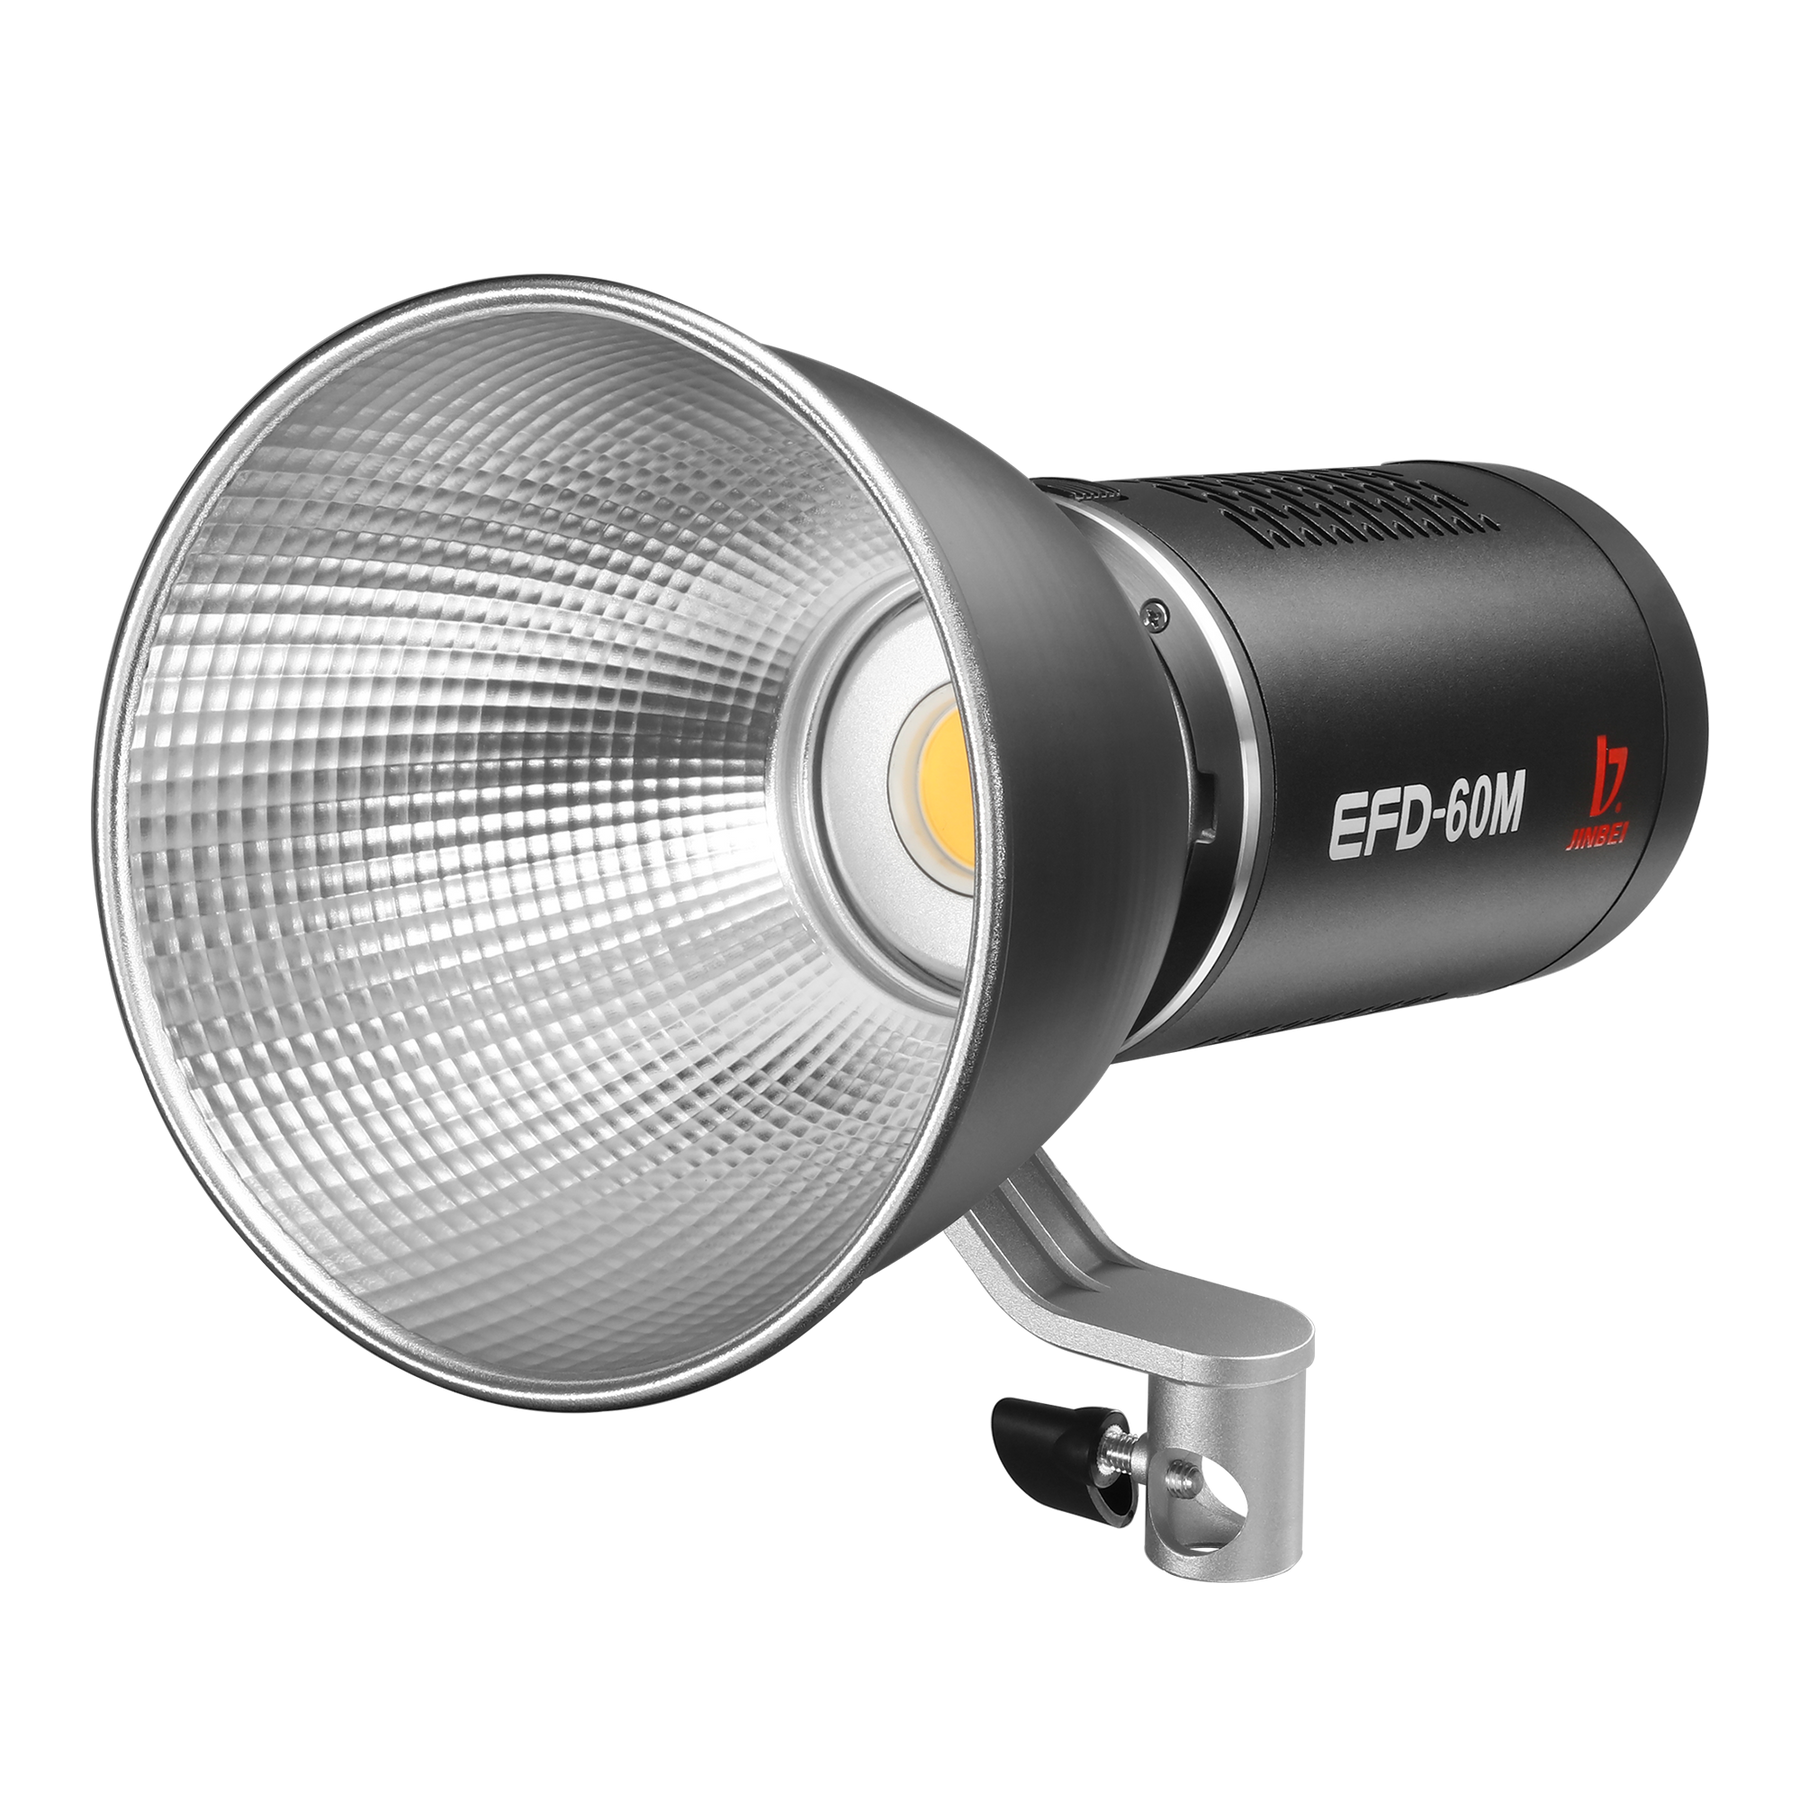 B-stock:EFD-60M LED permanent light